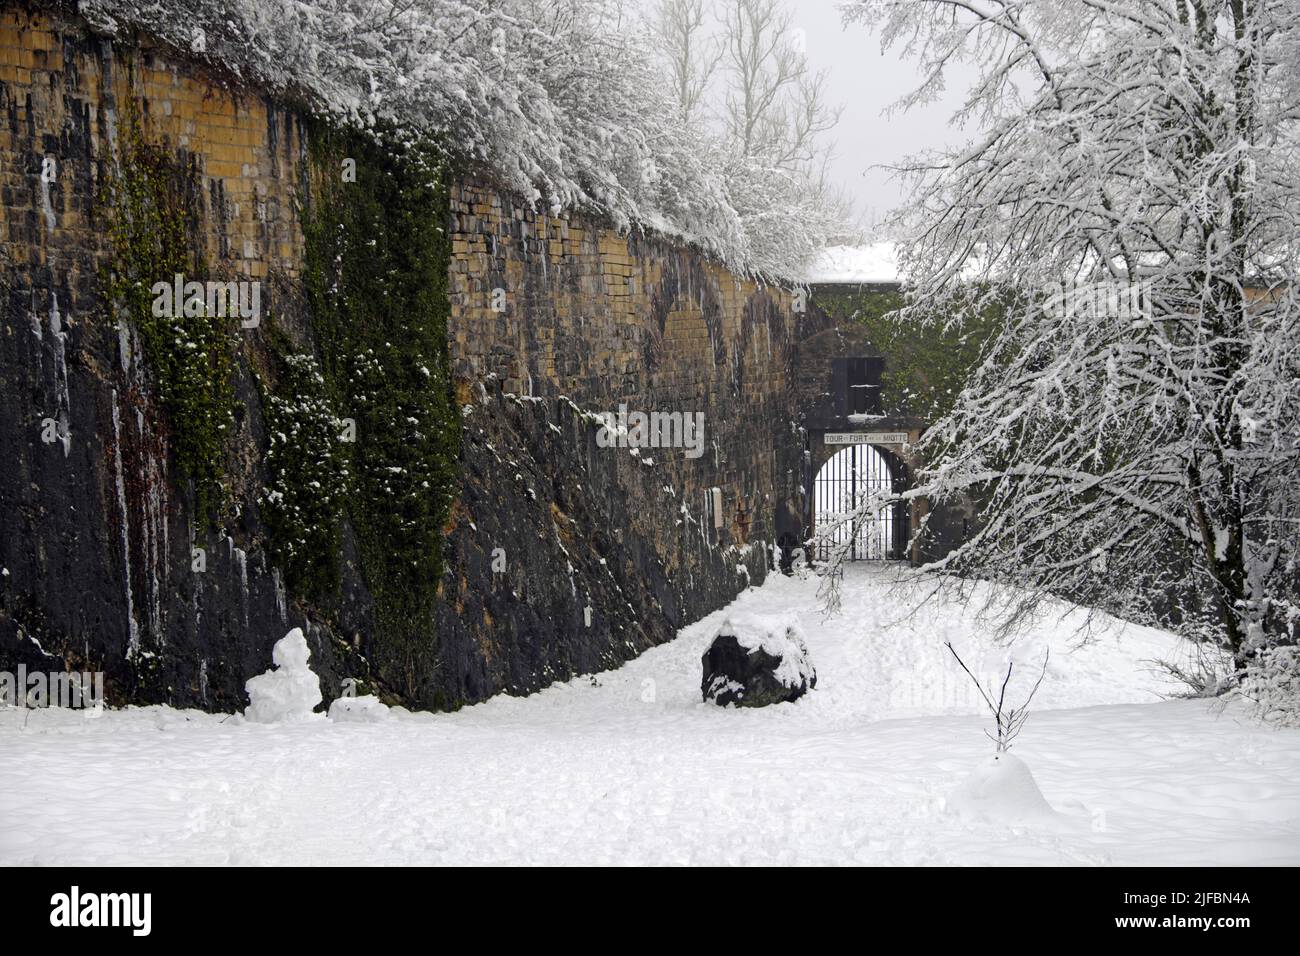 France, Territoire de Belfort, Belfort, Miotte fort built from 1831, entrance, winter, snow Stock Photo